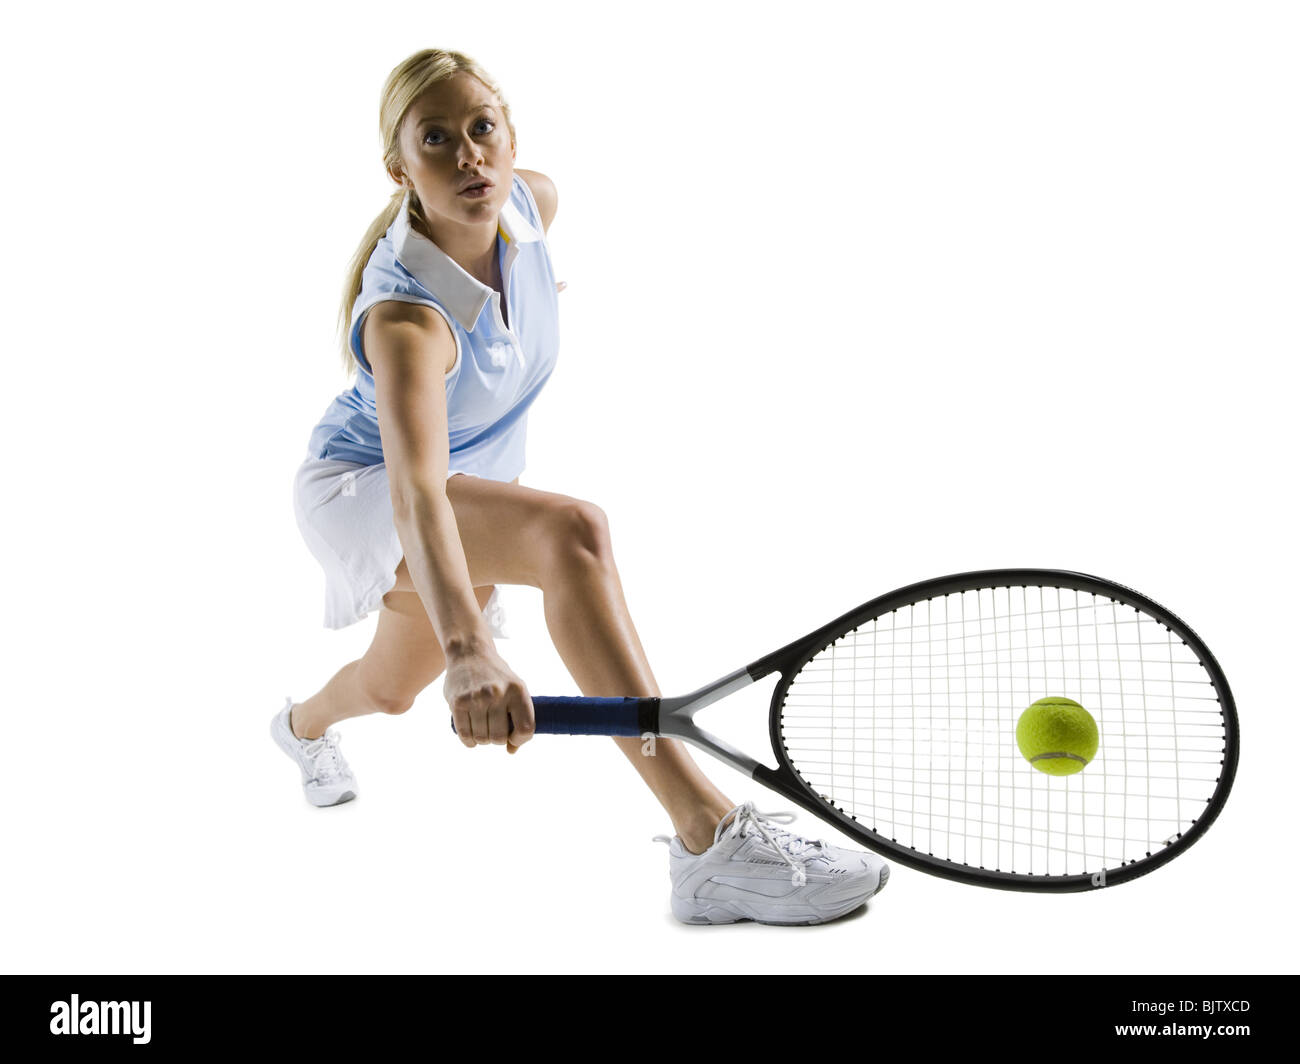 Close-up of tennis player hitting ball Stock Photo